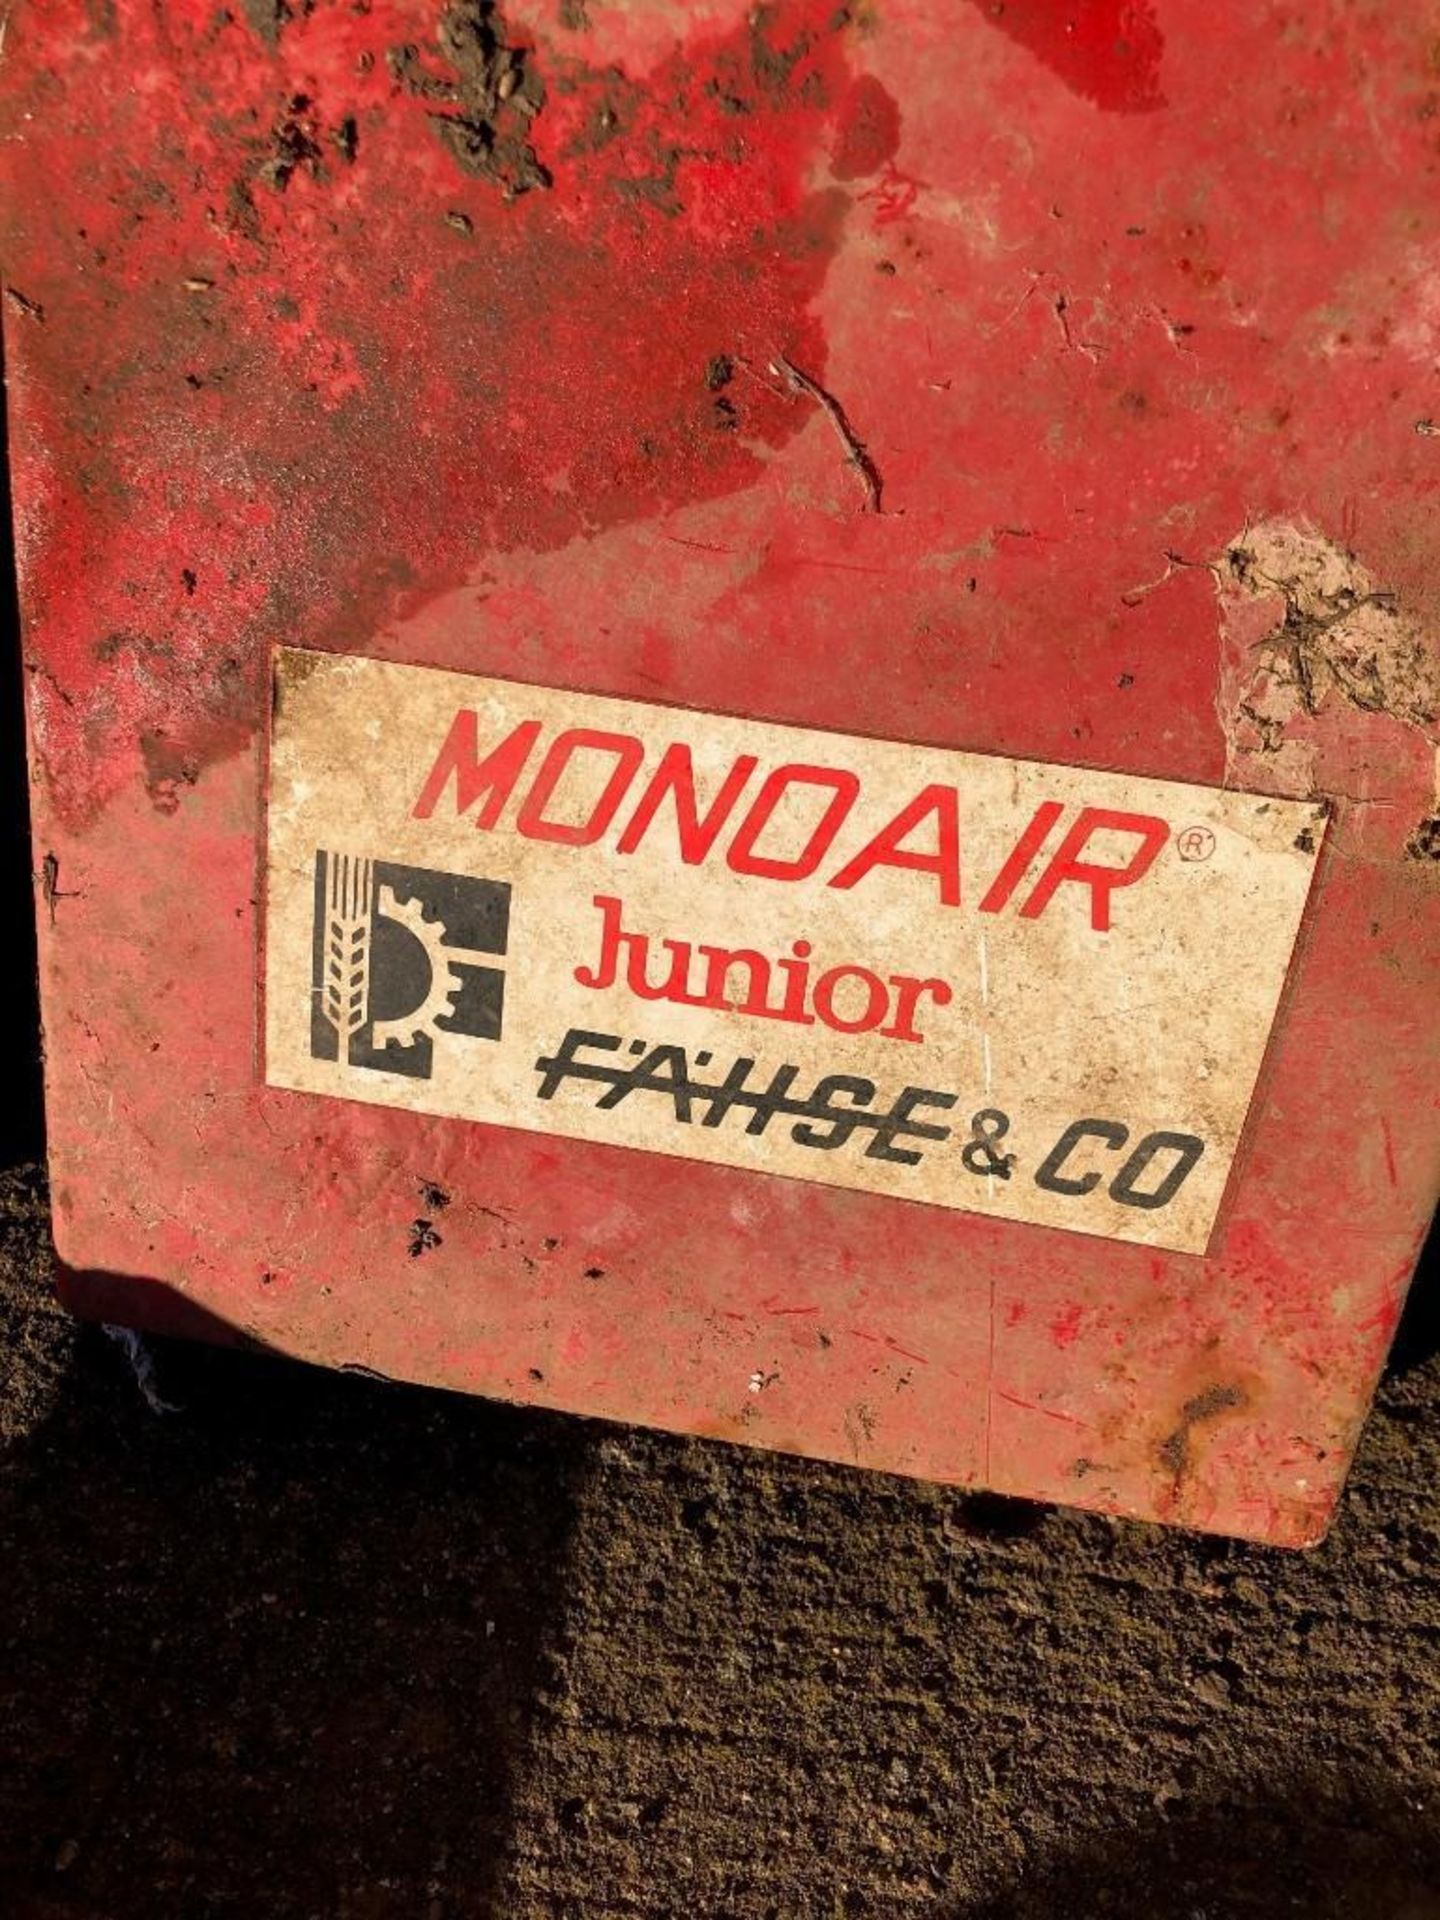 Matco Monoair Junior 6 Row Sugar Beet Drill - Image 5 of 5